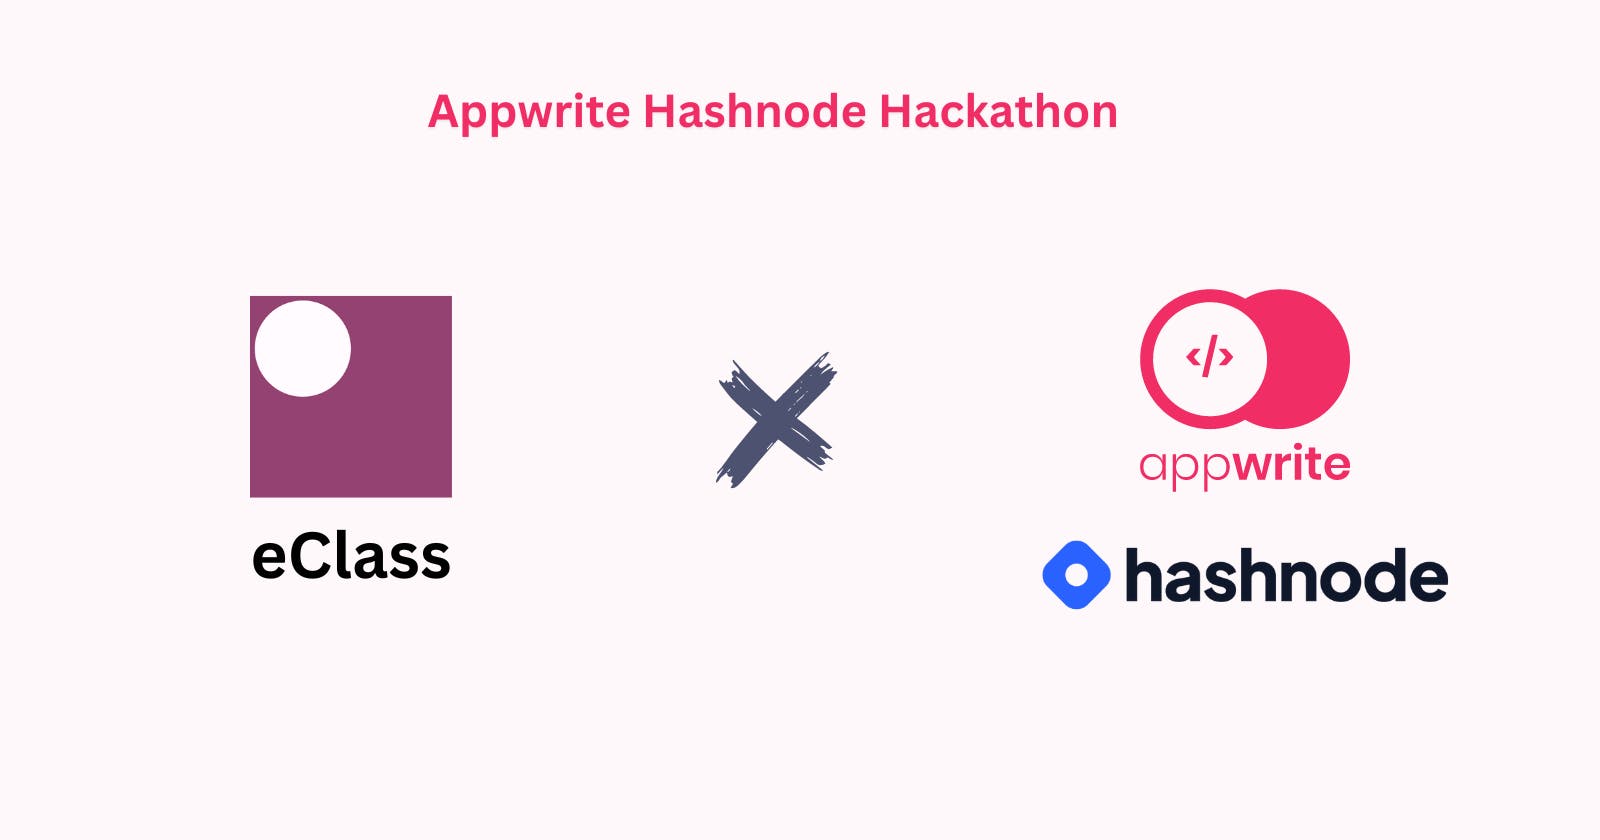 eClass : Appwrite Hashnode Hackathon